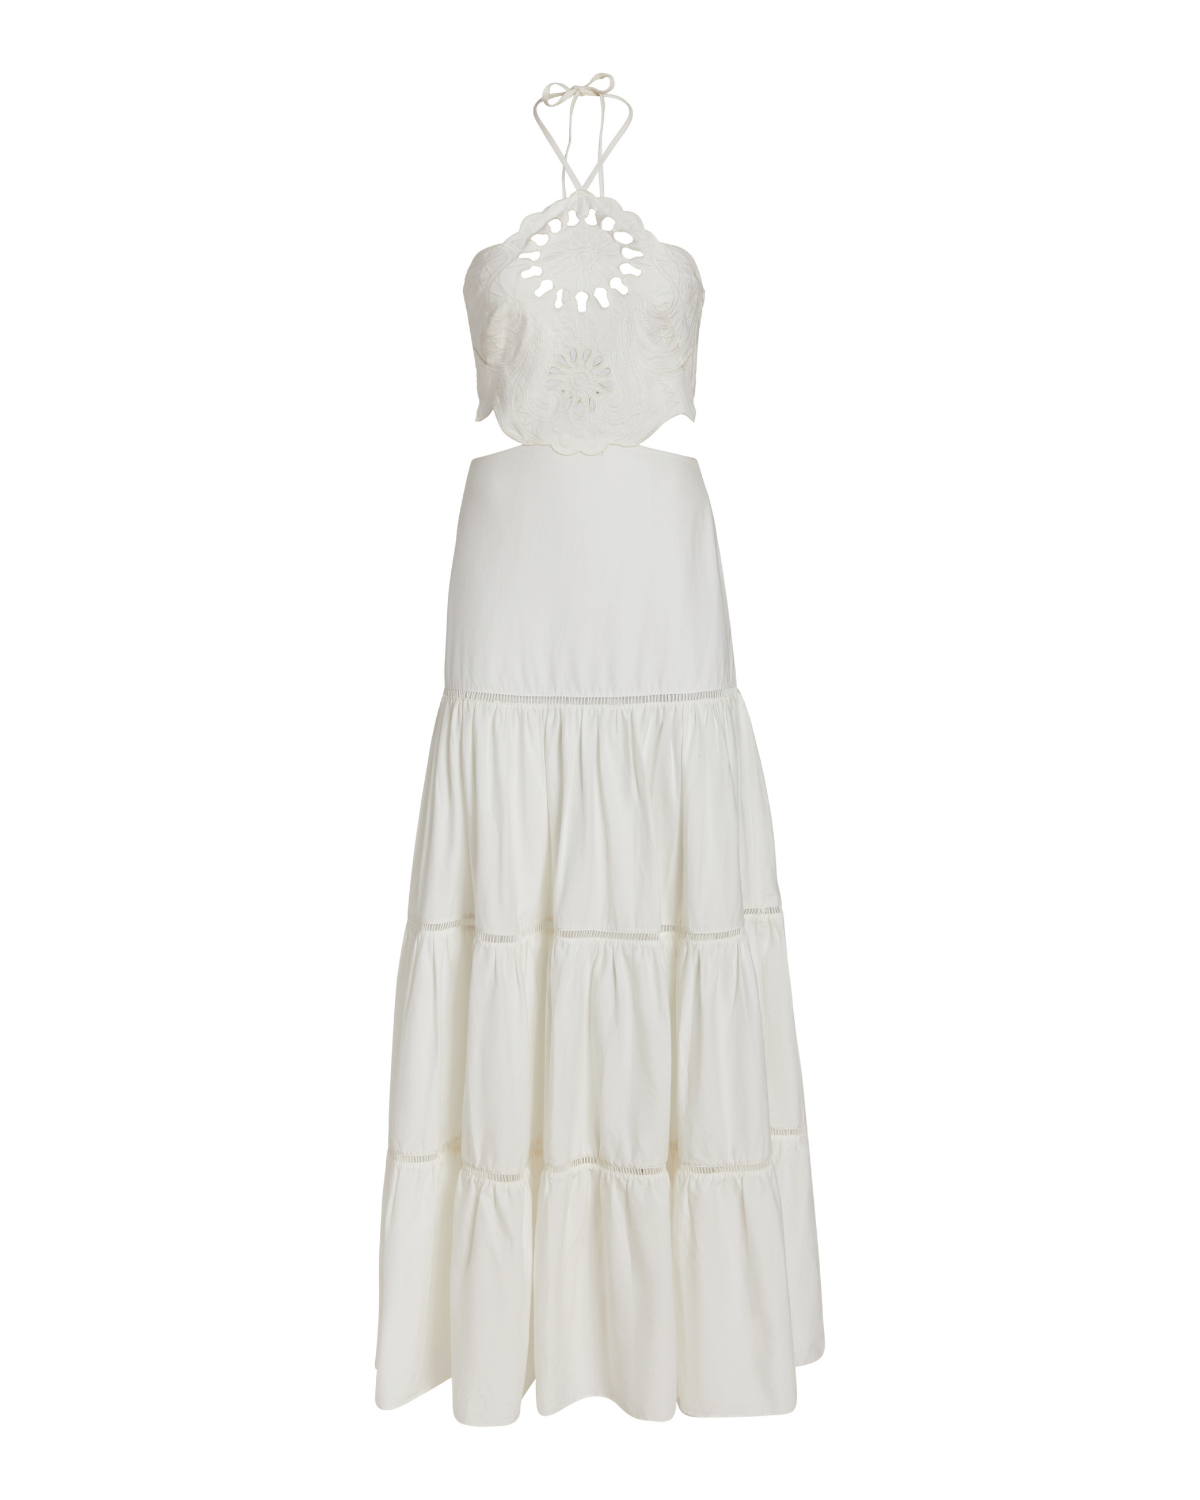 PatBo Lasercut Cotton Poplin Maxi Dress - Premium Long Dresses from Marina St Barth - Just $925! Shop now at Marina St Barth